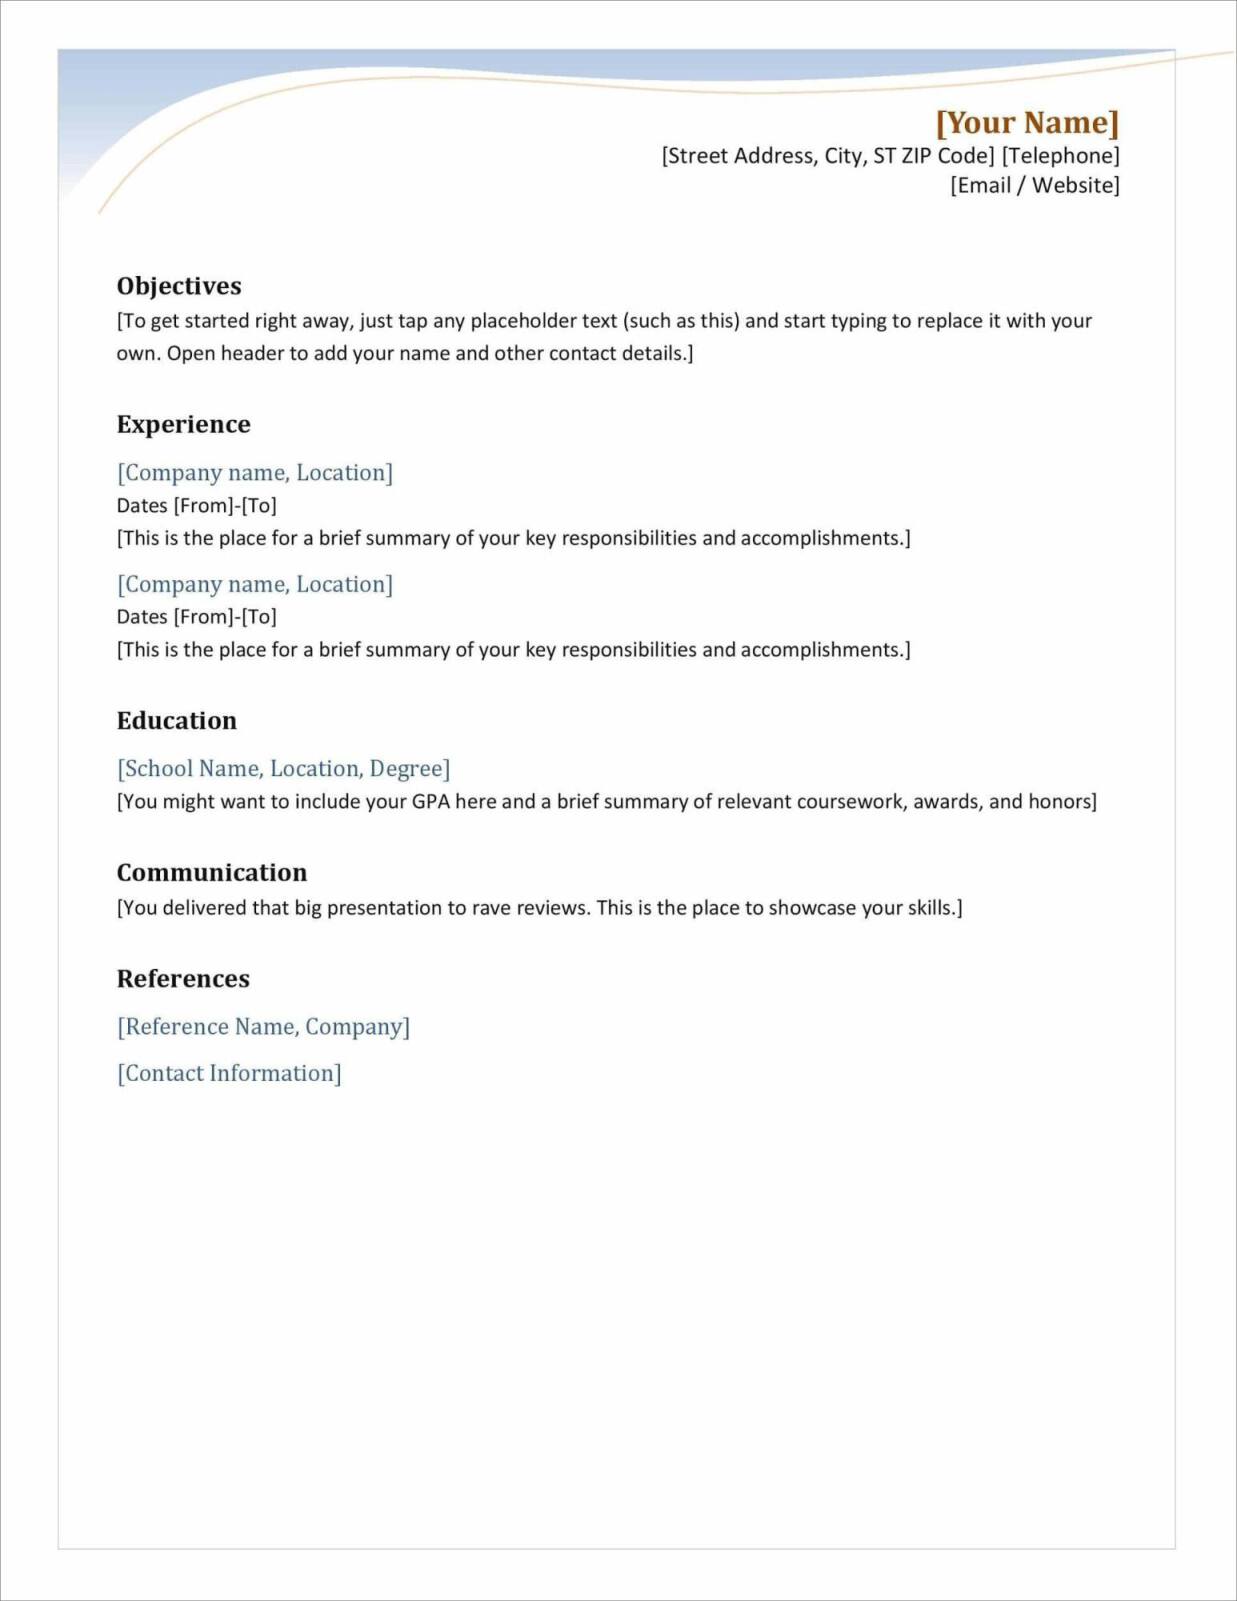 Online resume template word document - spluslop